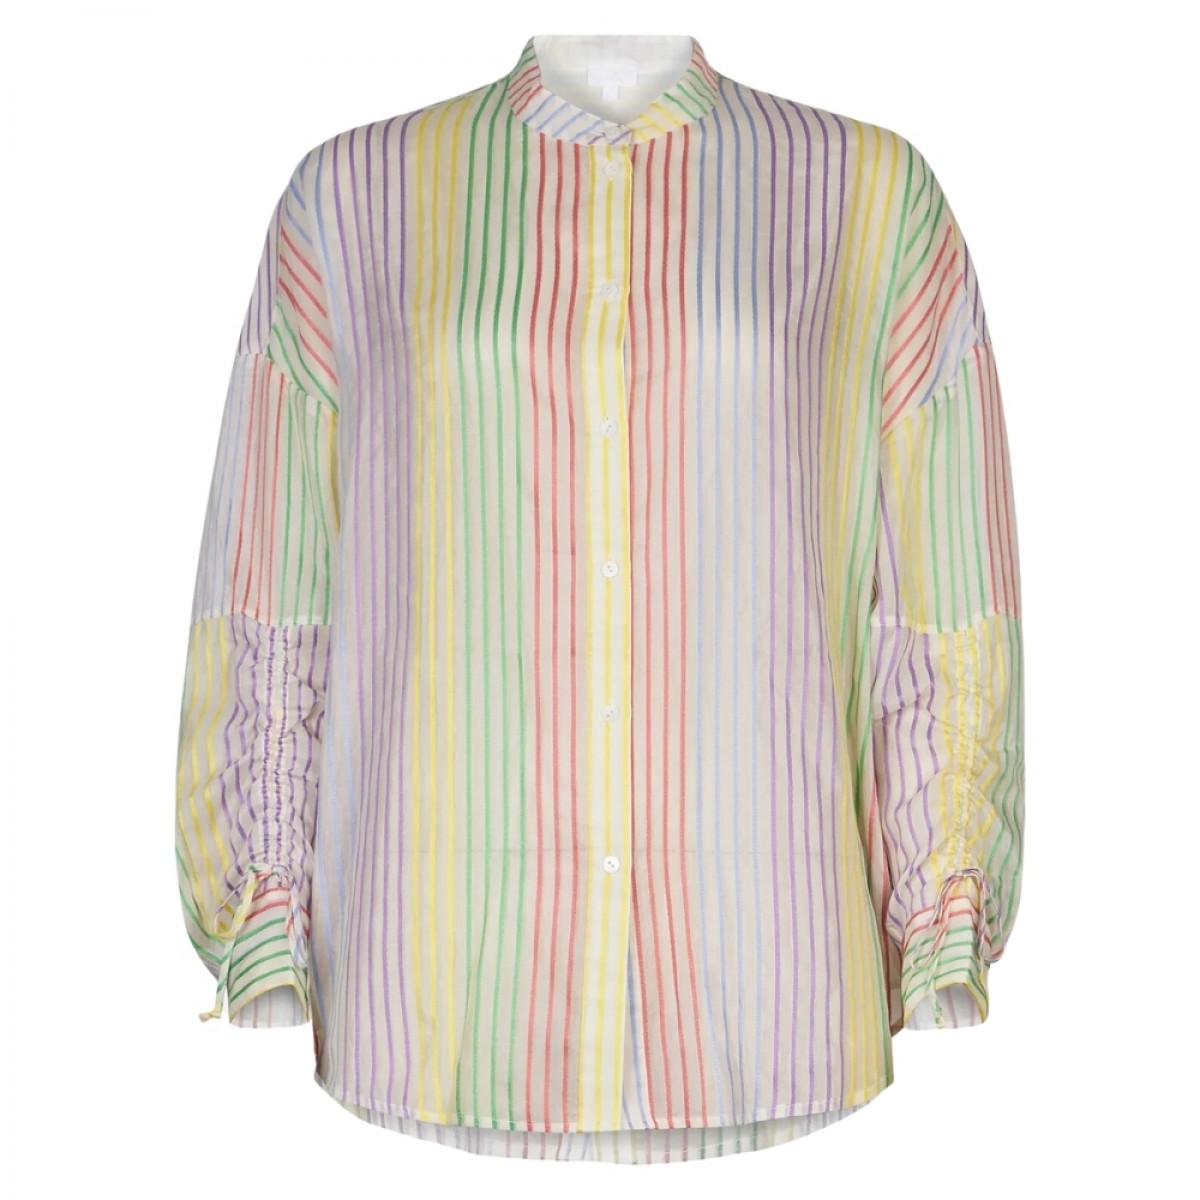 blouse birk - multico stripe - front